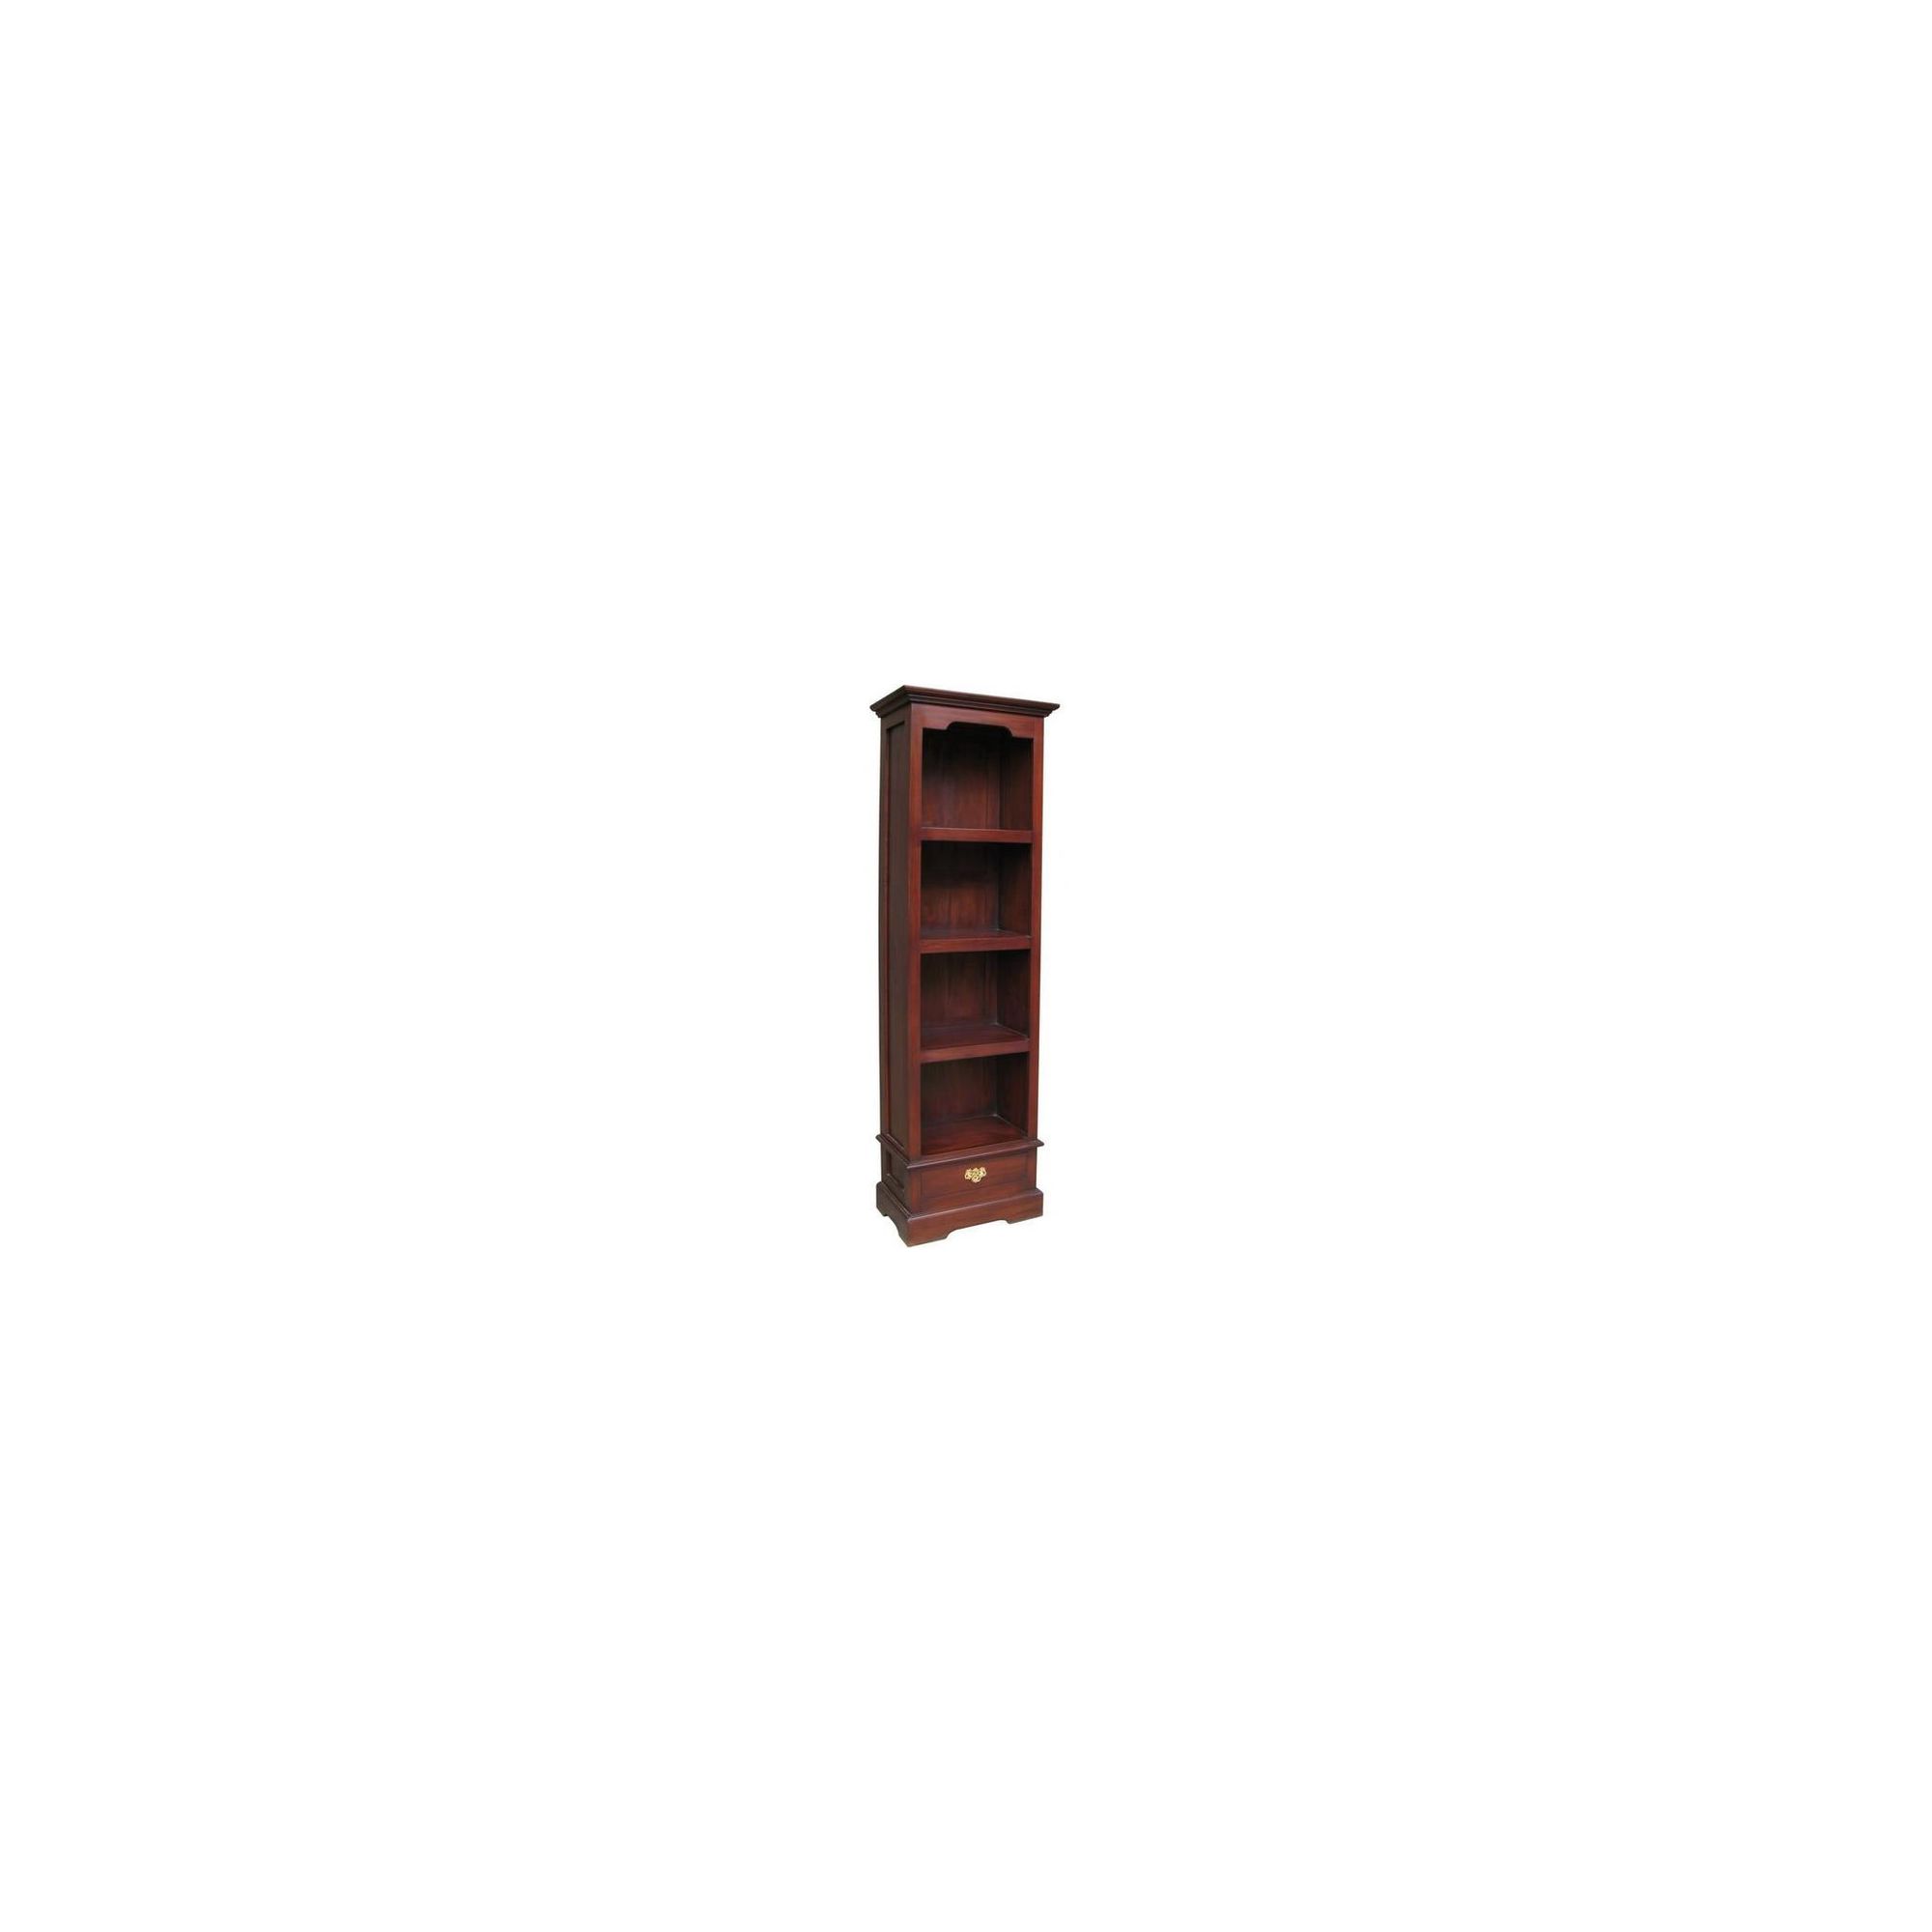 Lock stock and barrel Mahogany Narrow 1 Drawer Bookcase in Mahogany at Tescos Direct